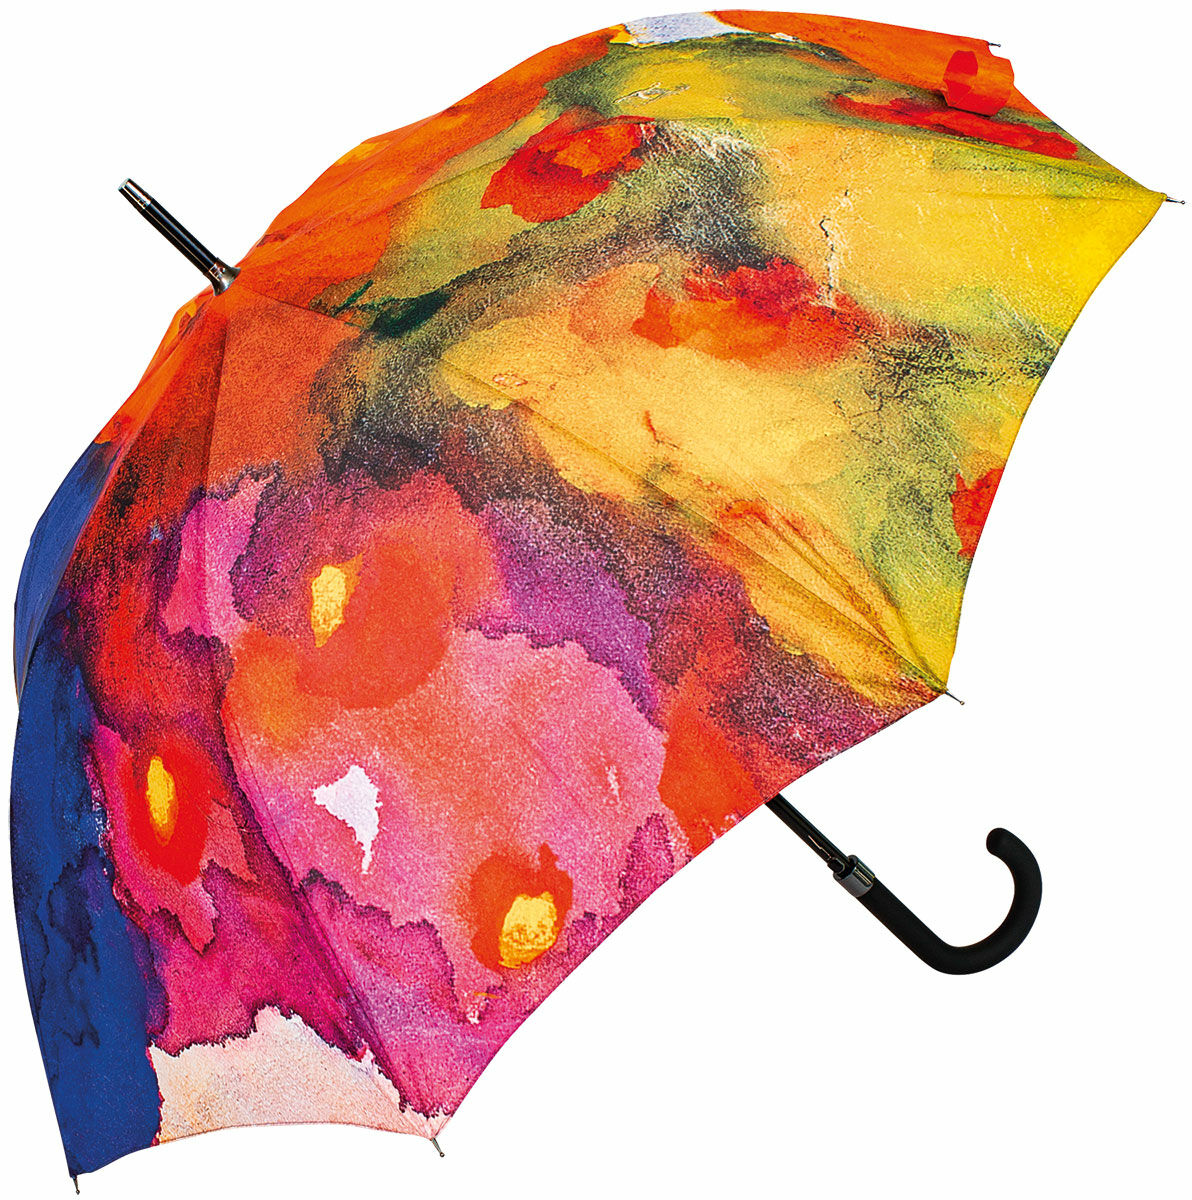 Stick-paraply "Sommerblomster" von Emil Nolde